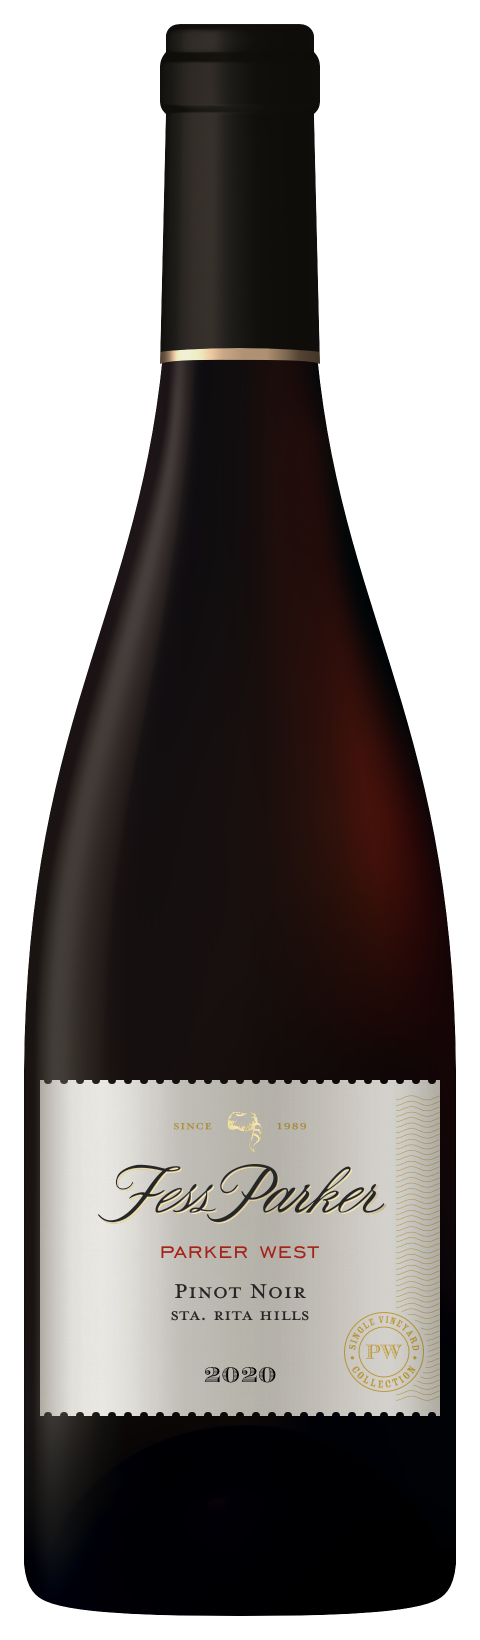 Bottle shot of Parker West Pinot Noir